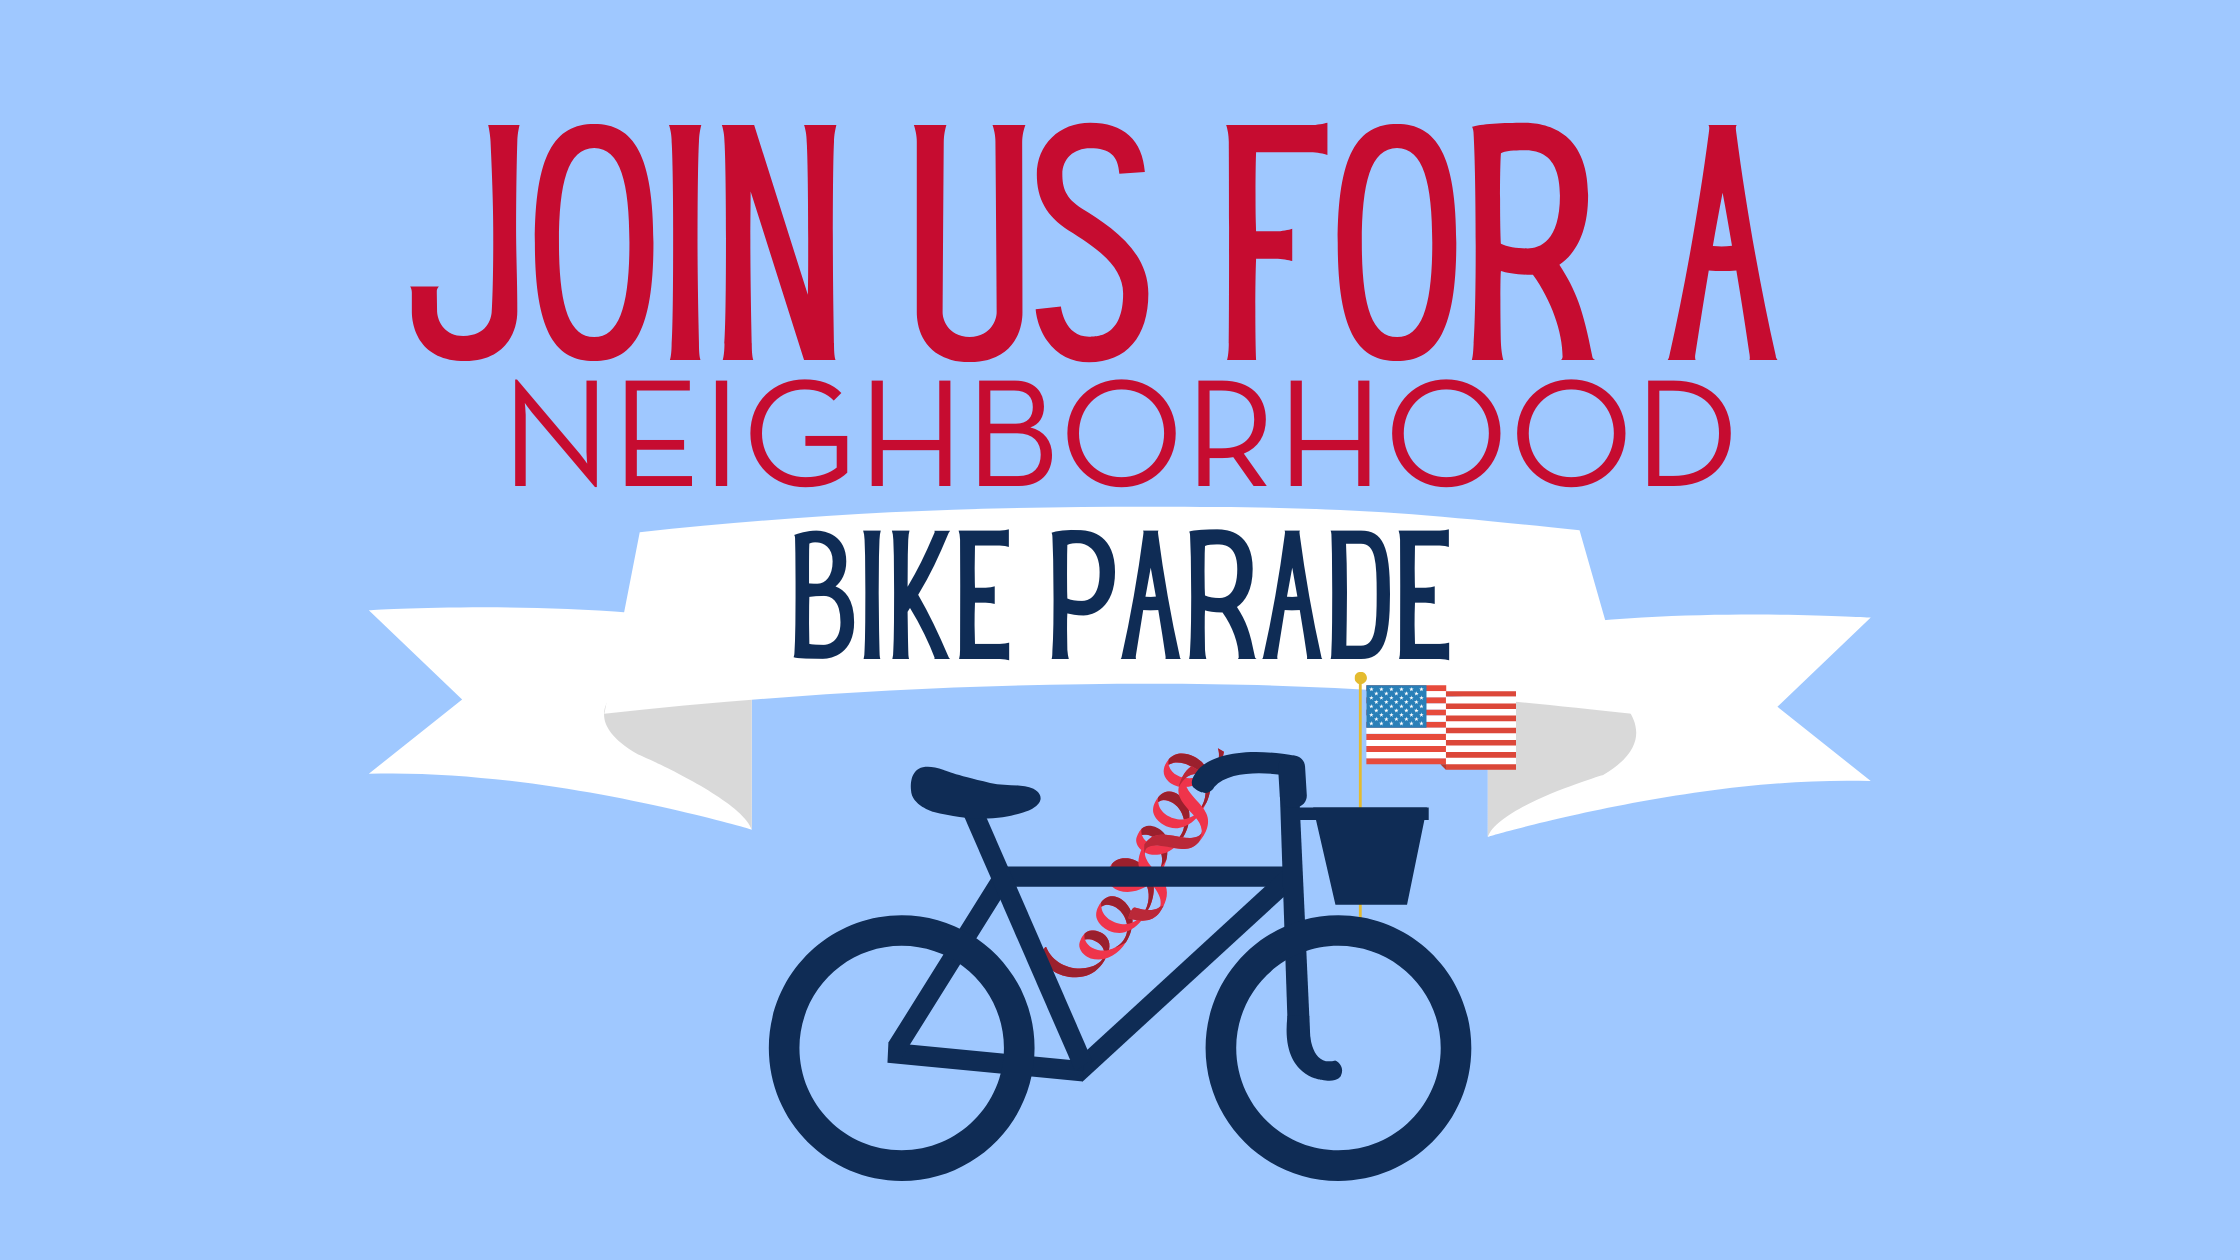 "Join us for a neighborhood bike parade" over a bike